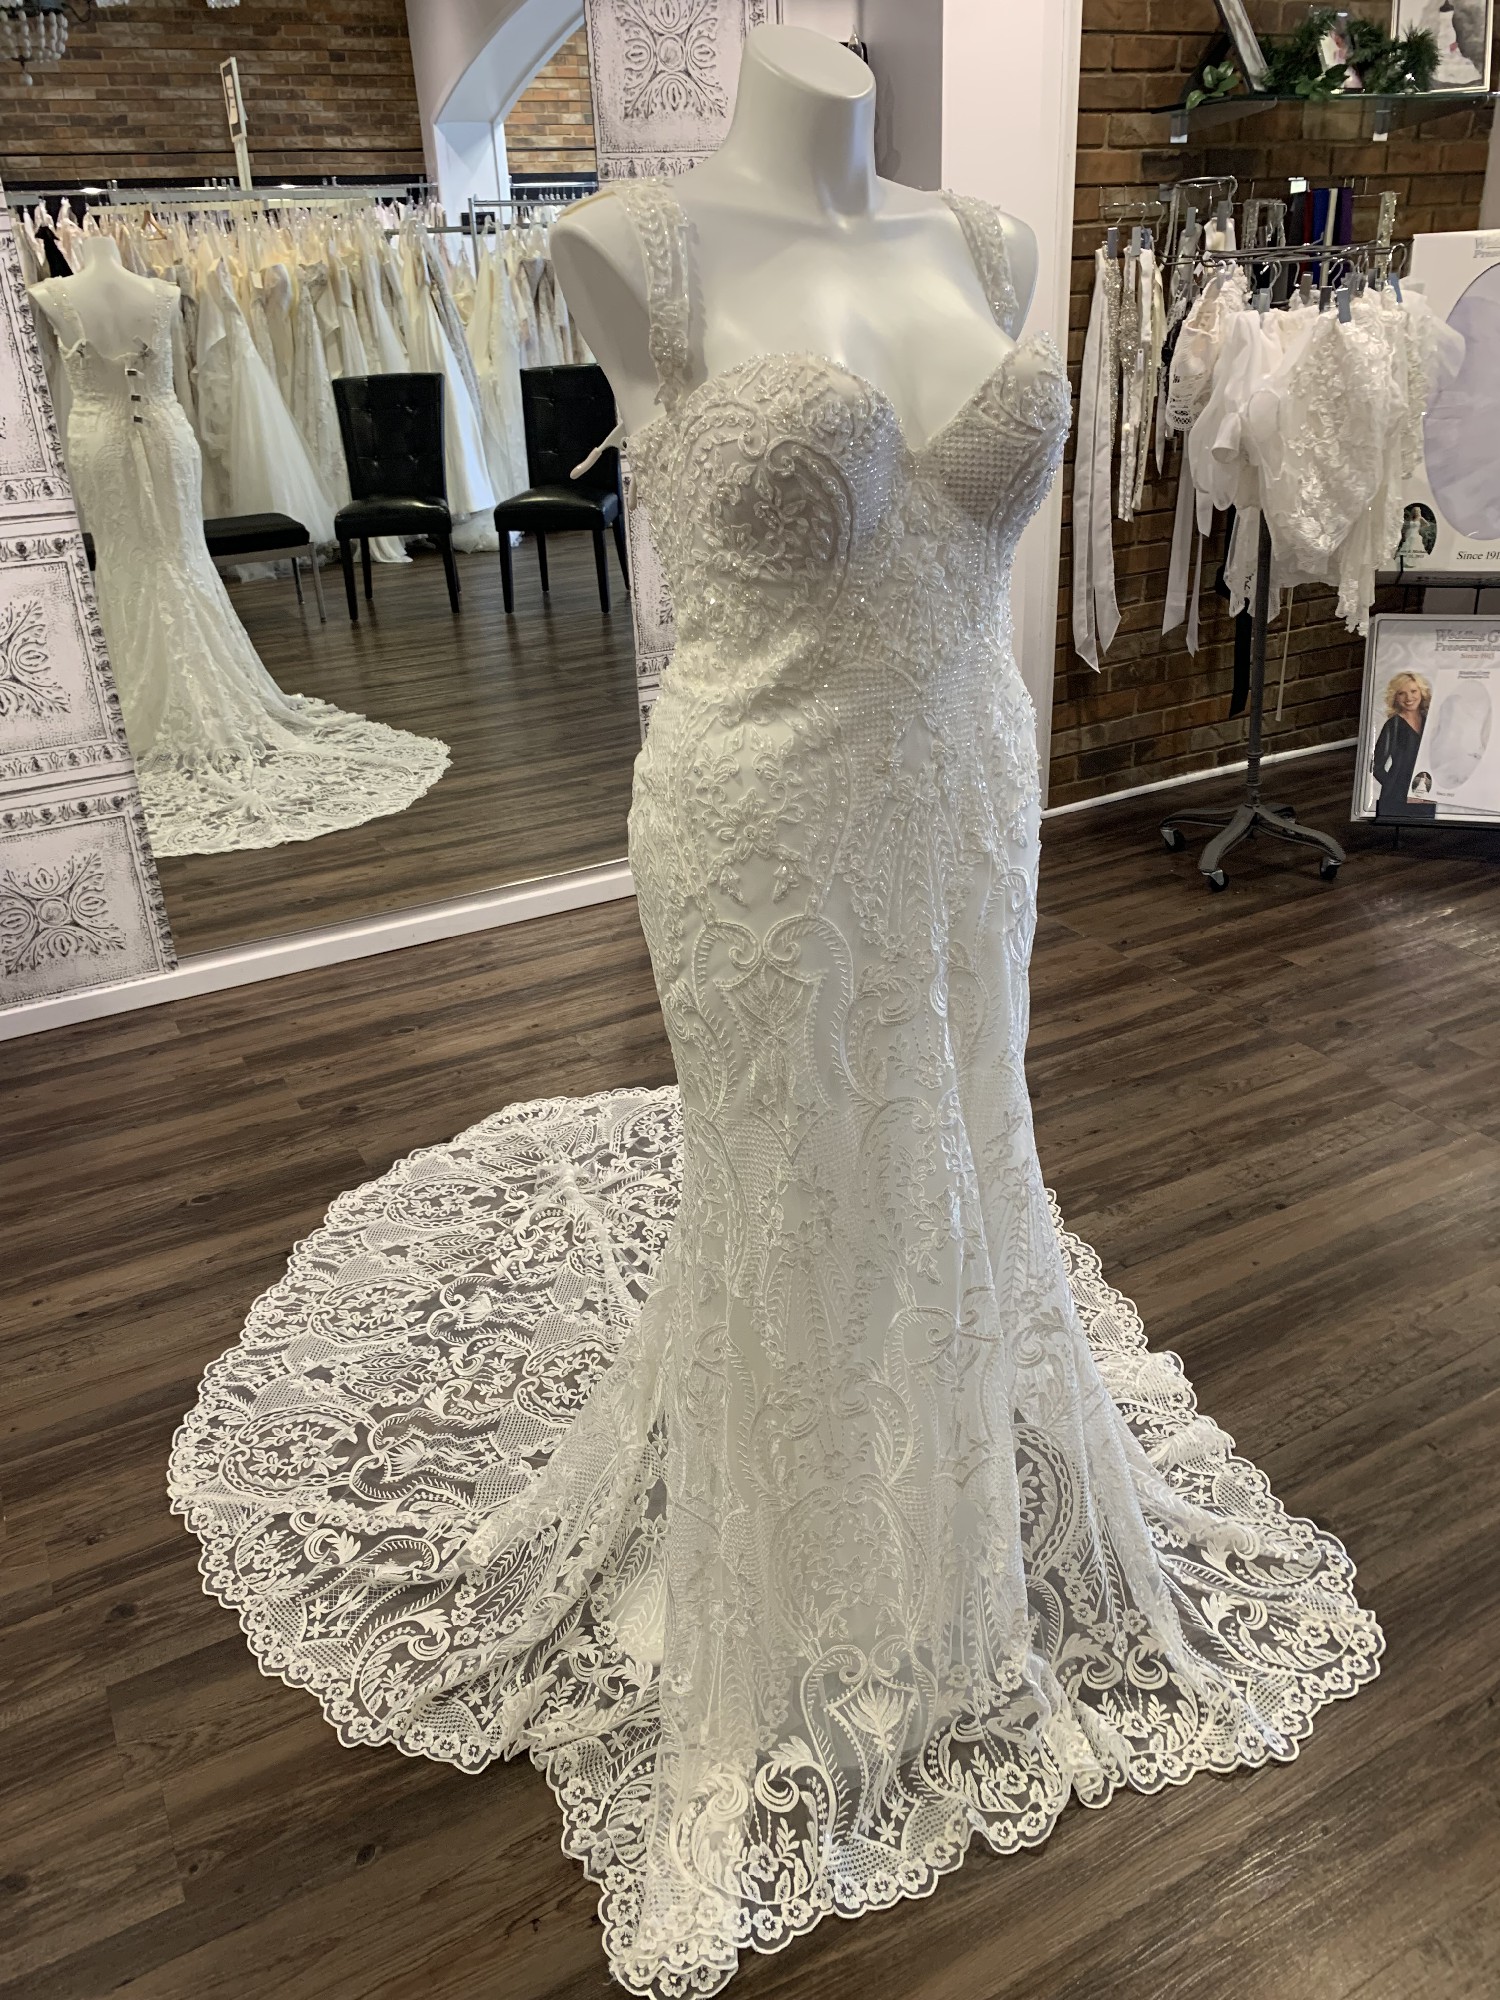 Pollardi Diane 3190 00.17 New Wedding Dress Save 57% - Stillwhite